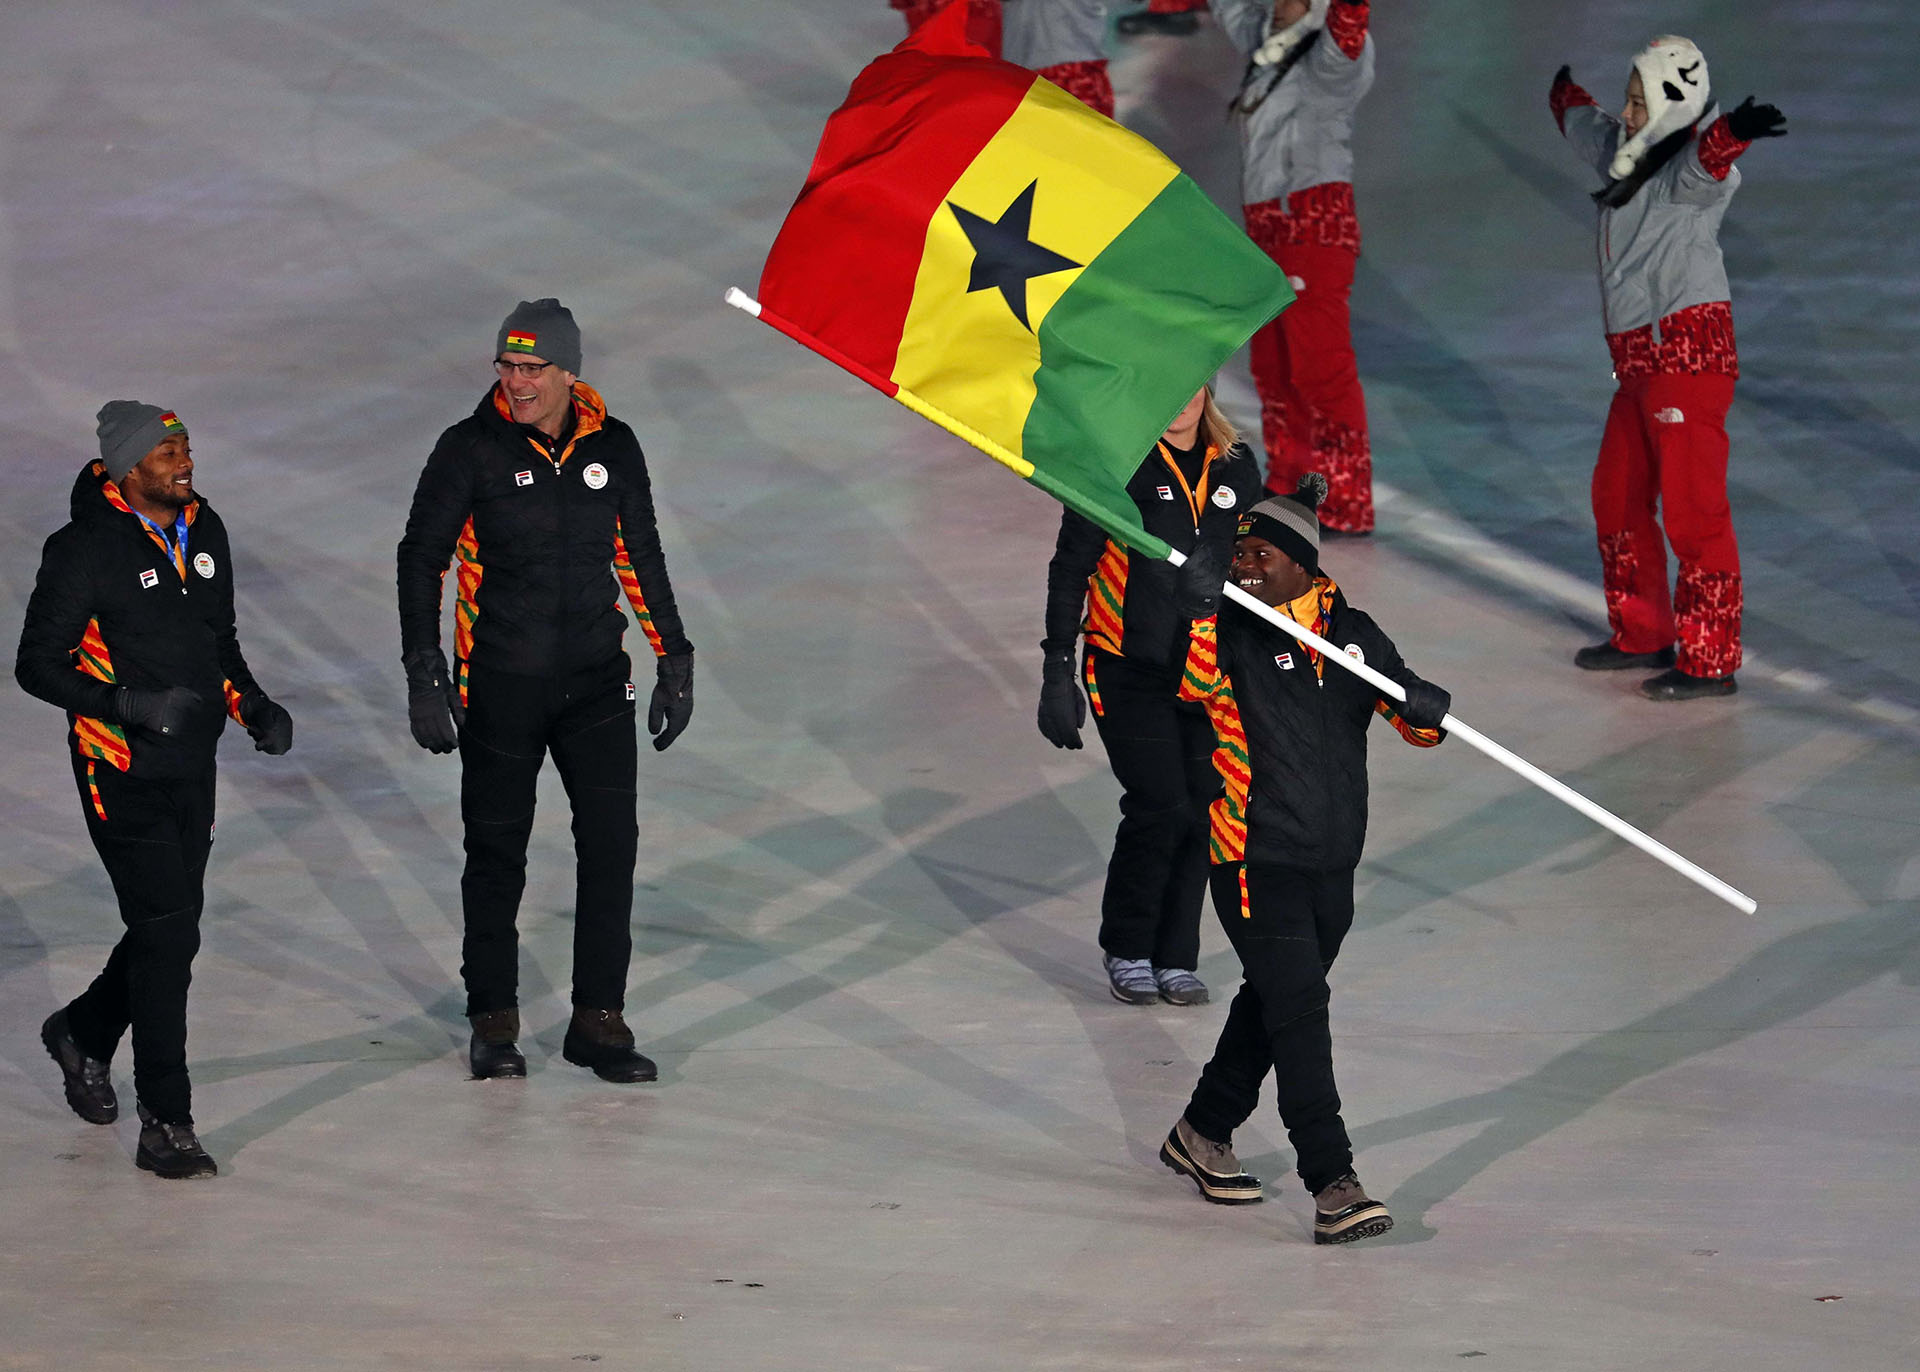 Pyeongchang 2018 Winter Olympics – Opening ceremony – Pyeongchang Olympic Stadium - Pyeongchang, South Korea – February 9, 2018 - Akwasi Frimpong of Ghana carries the national flag. REUTERS/Damir Sagolj